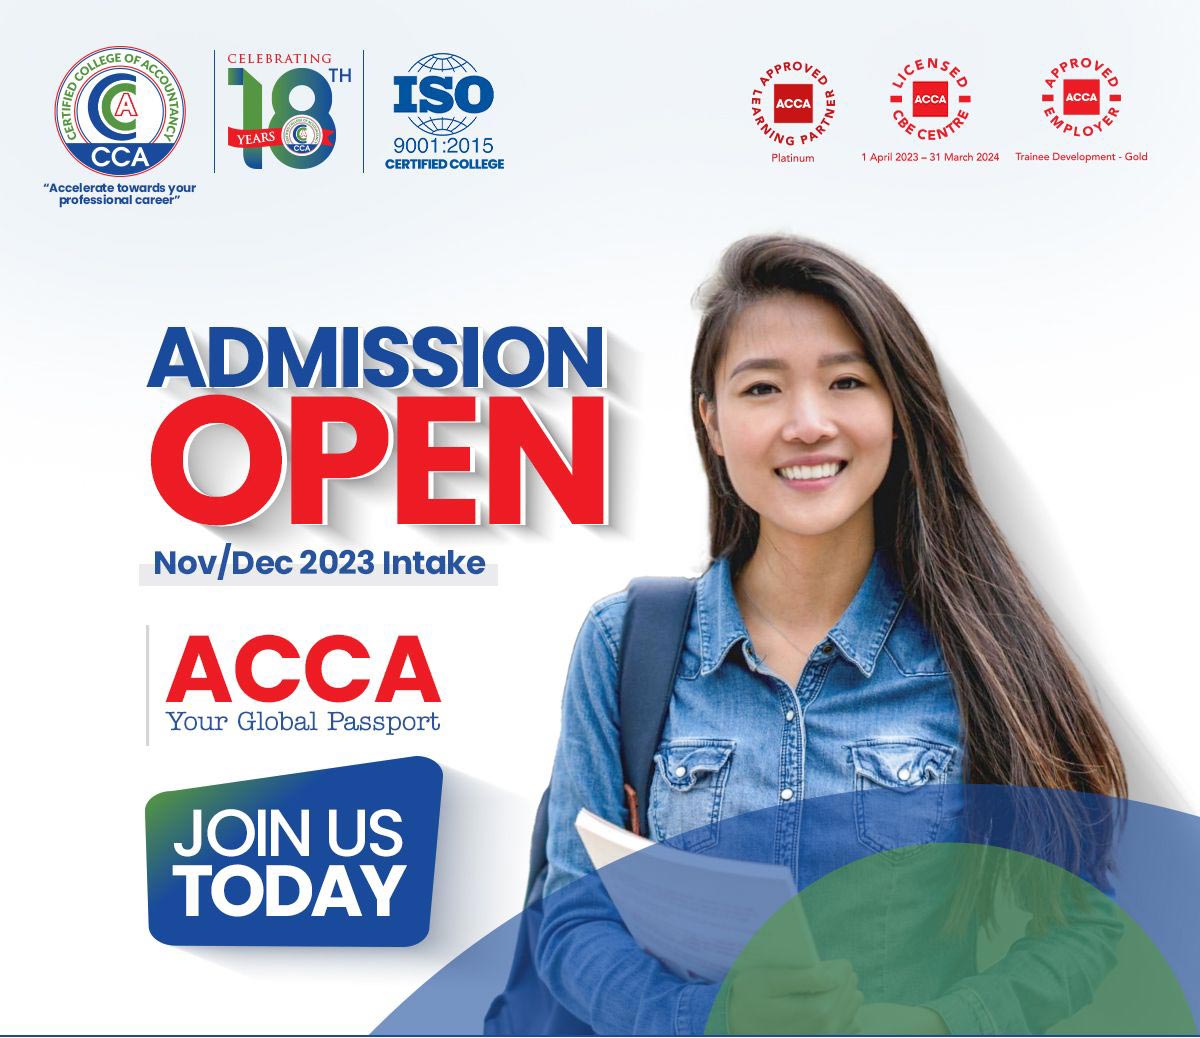 CCA Admission Open for ACCA Nov Dec 2023